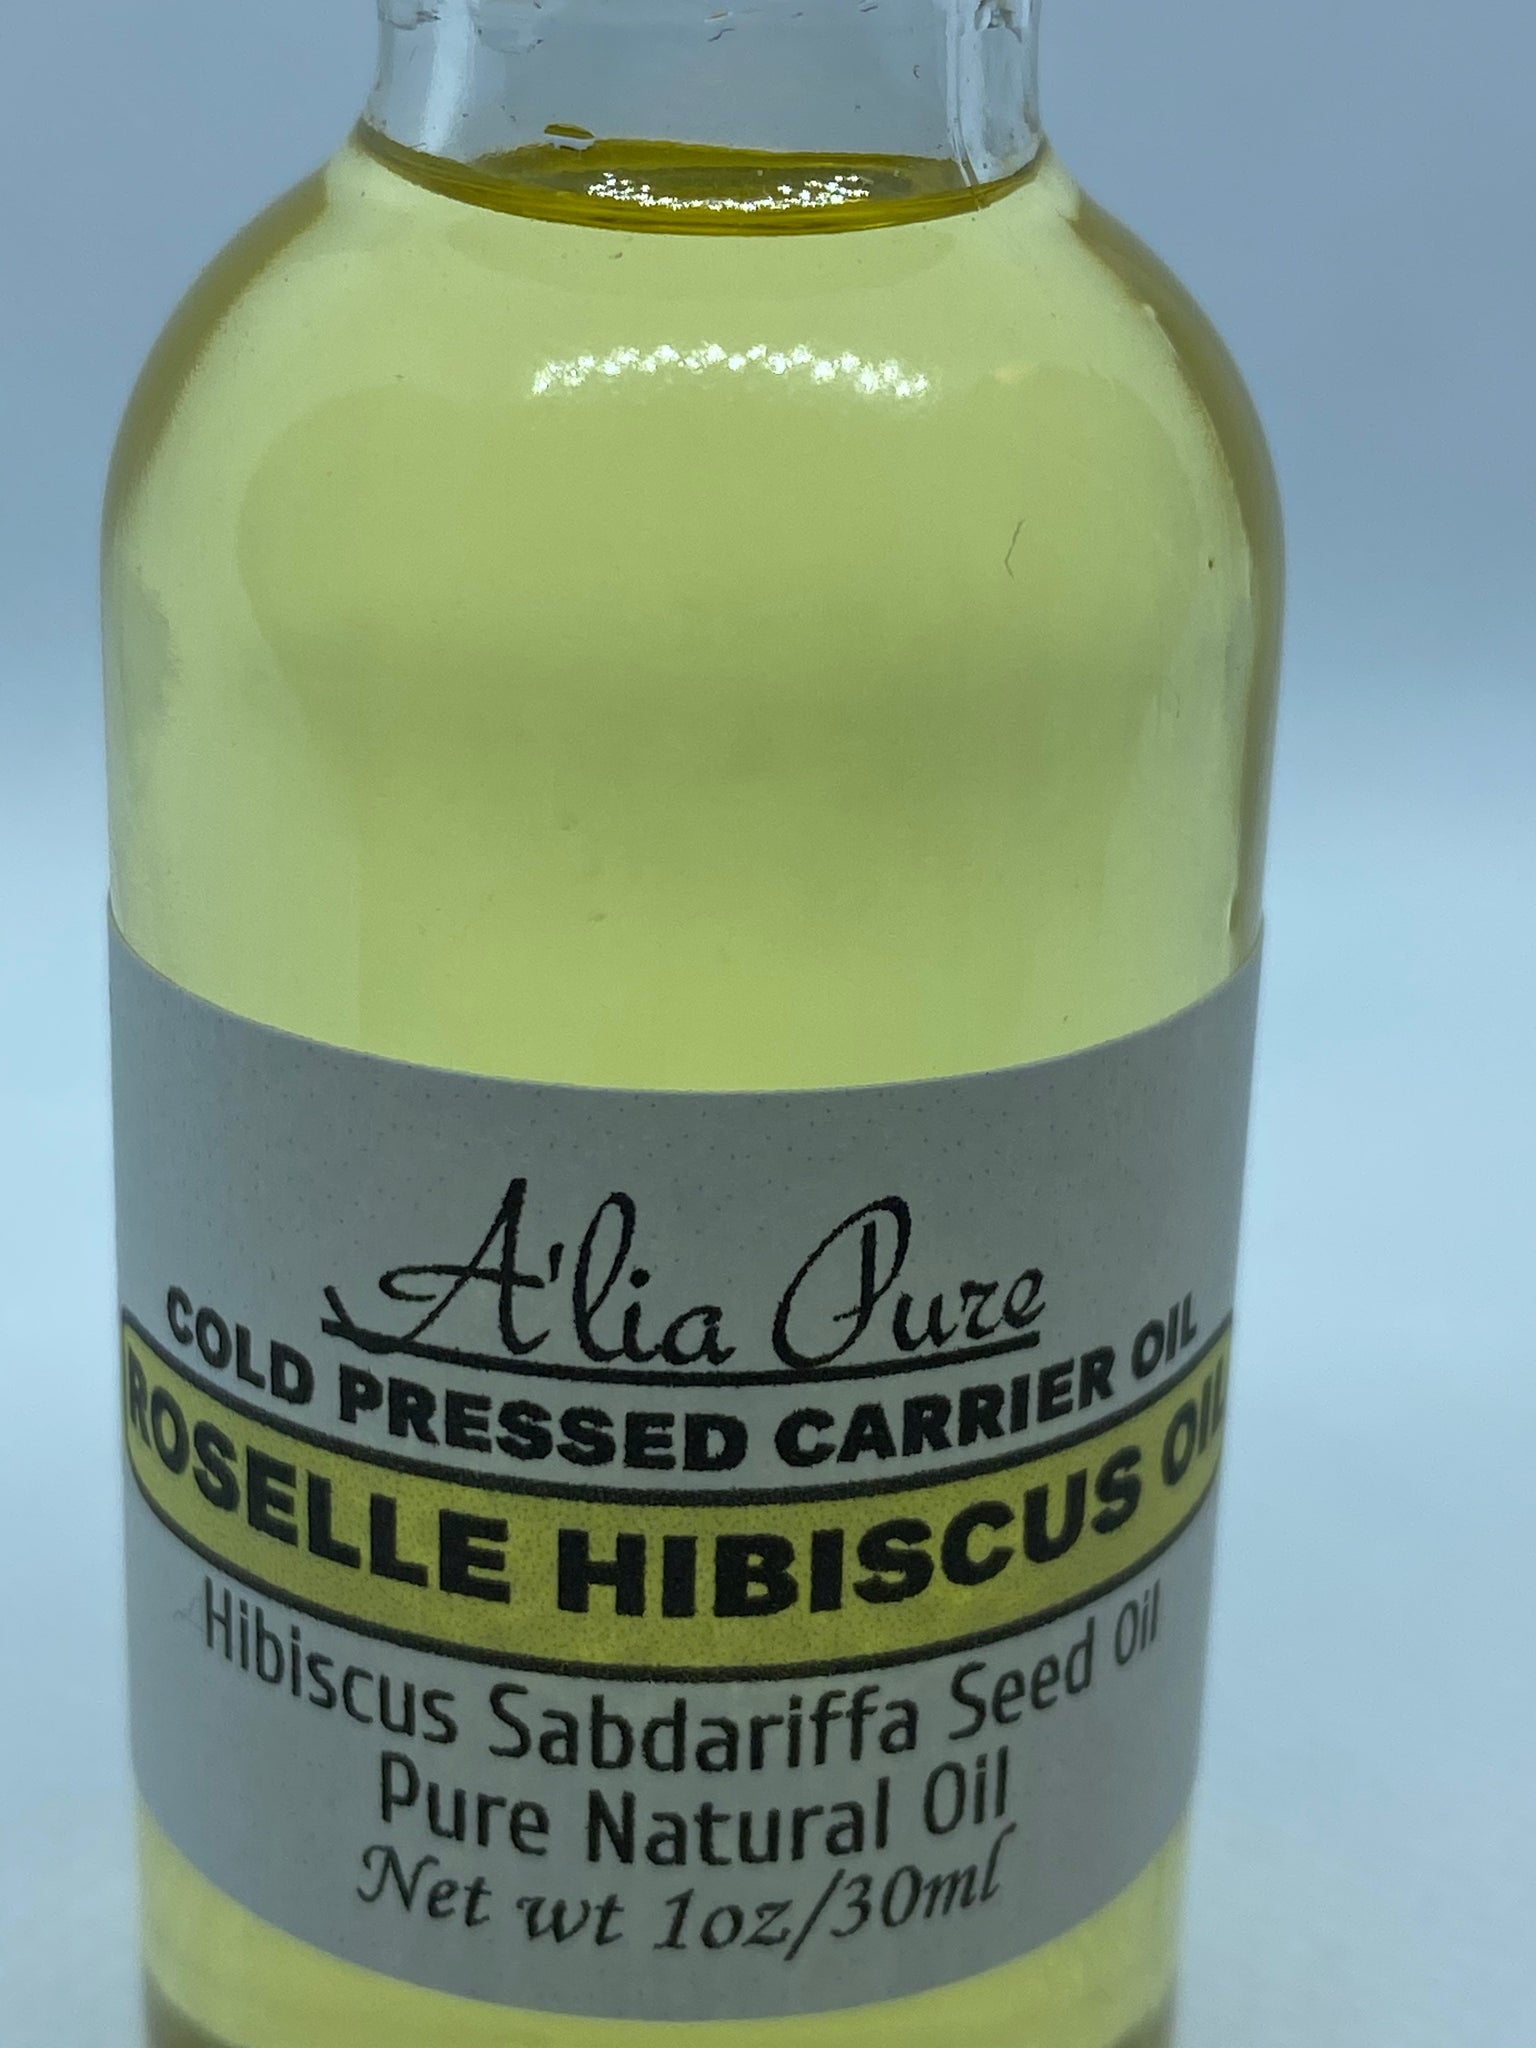 Roselle Hibiscus Seed Oil